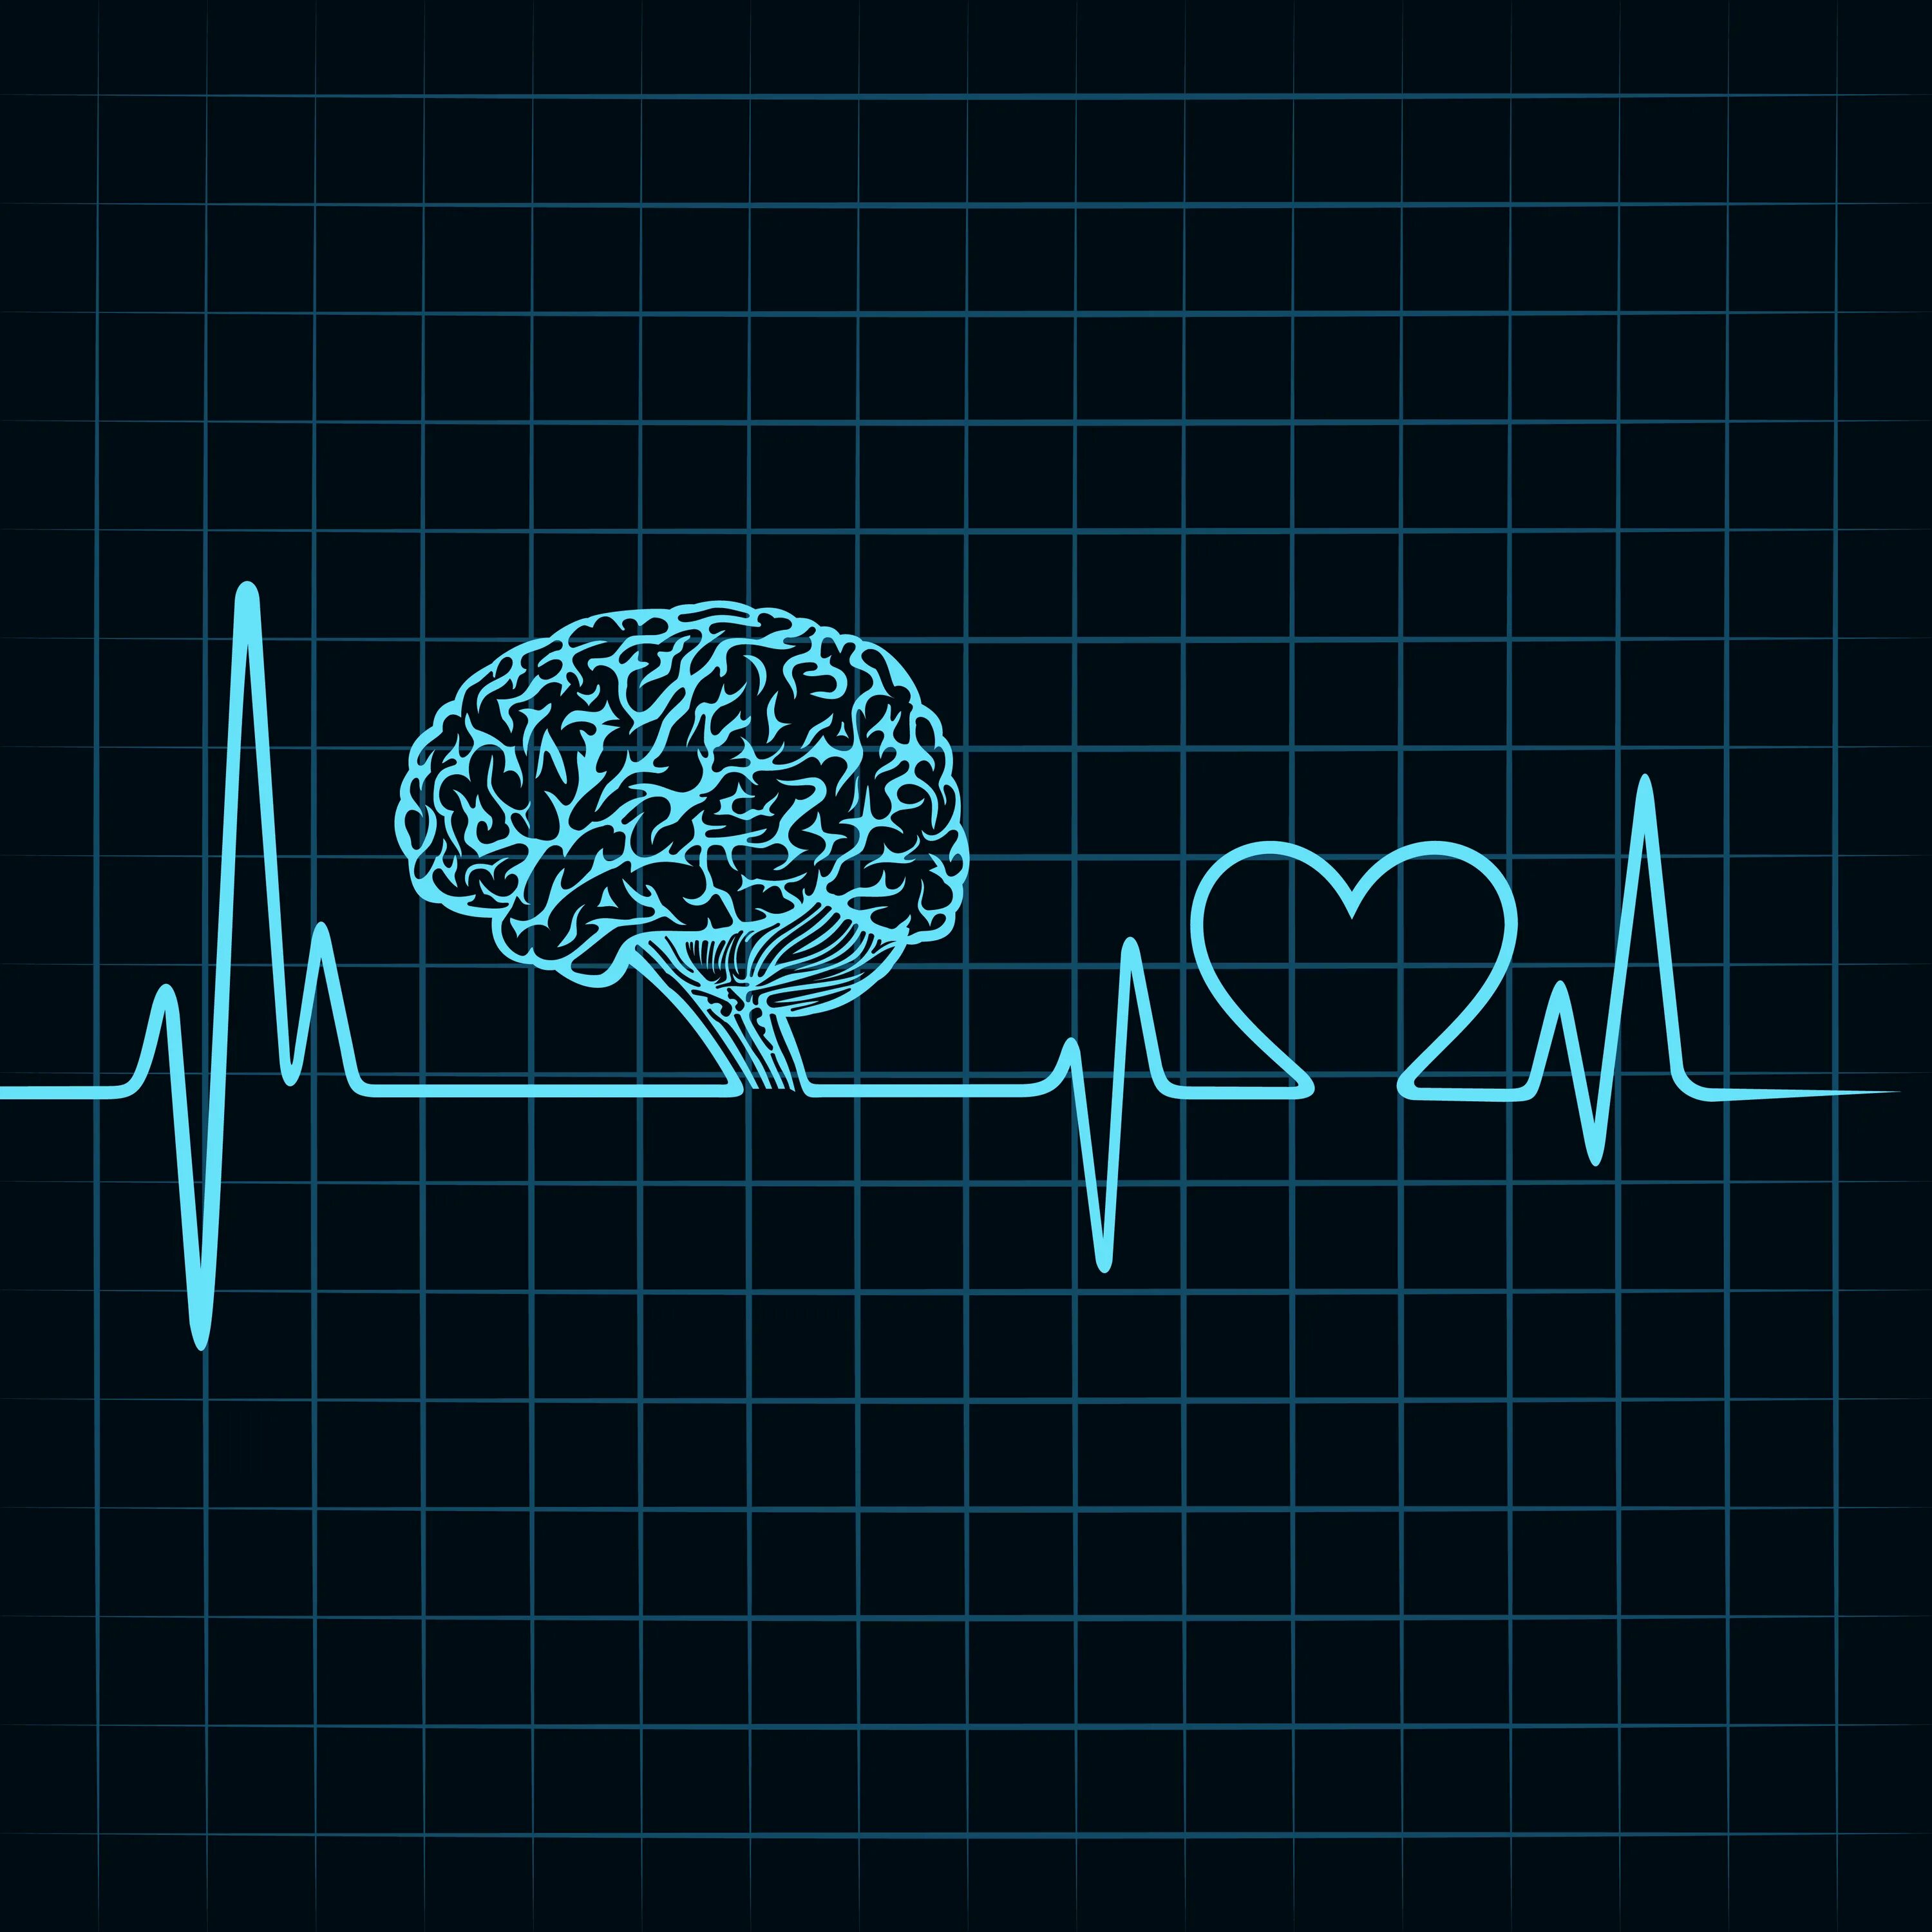 Heart and brain. Мозг и сердце. Сердце и разум. Сердце и мозг человека. Ум и сердце.